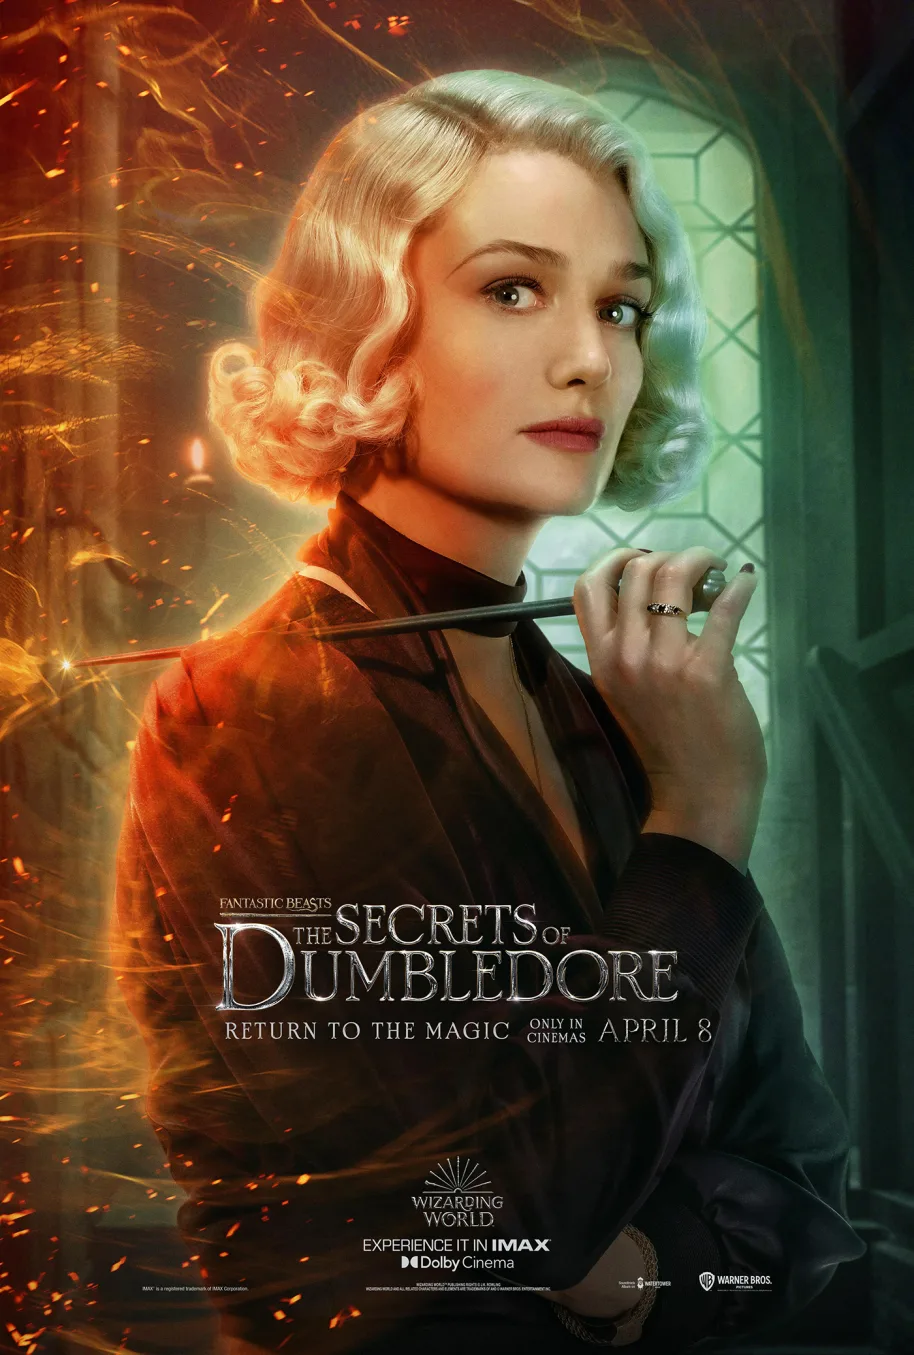 “Fantastic Beasts: The Secrets of Dumbledore”: Queenie Goldstein character poster